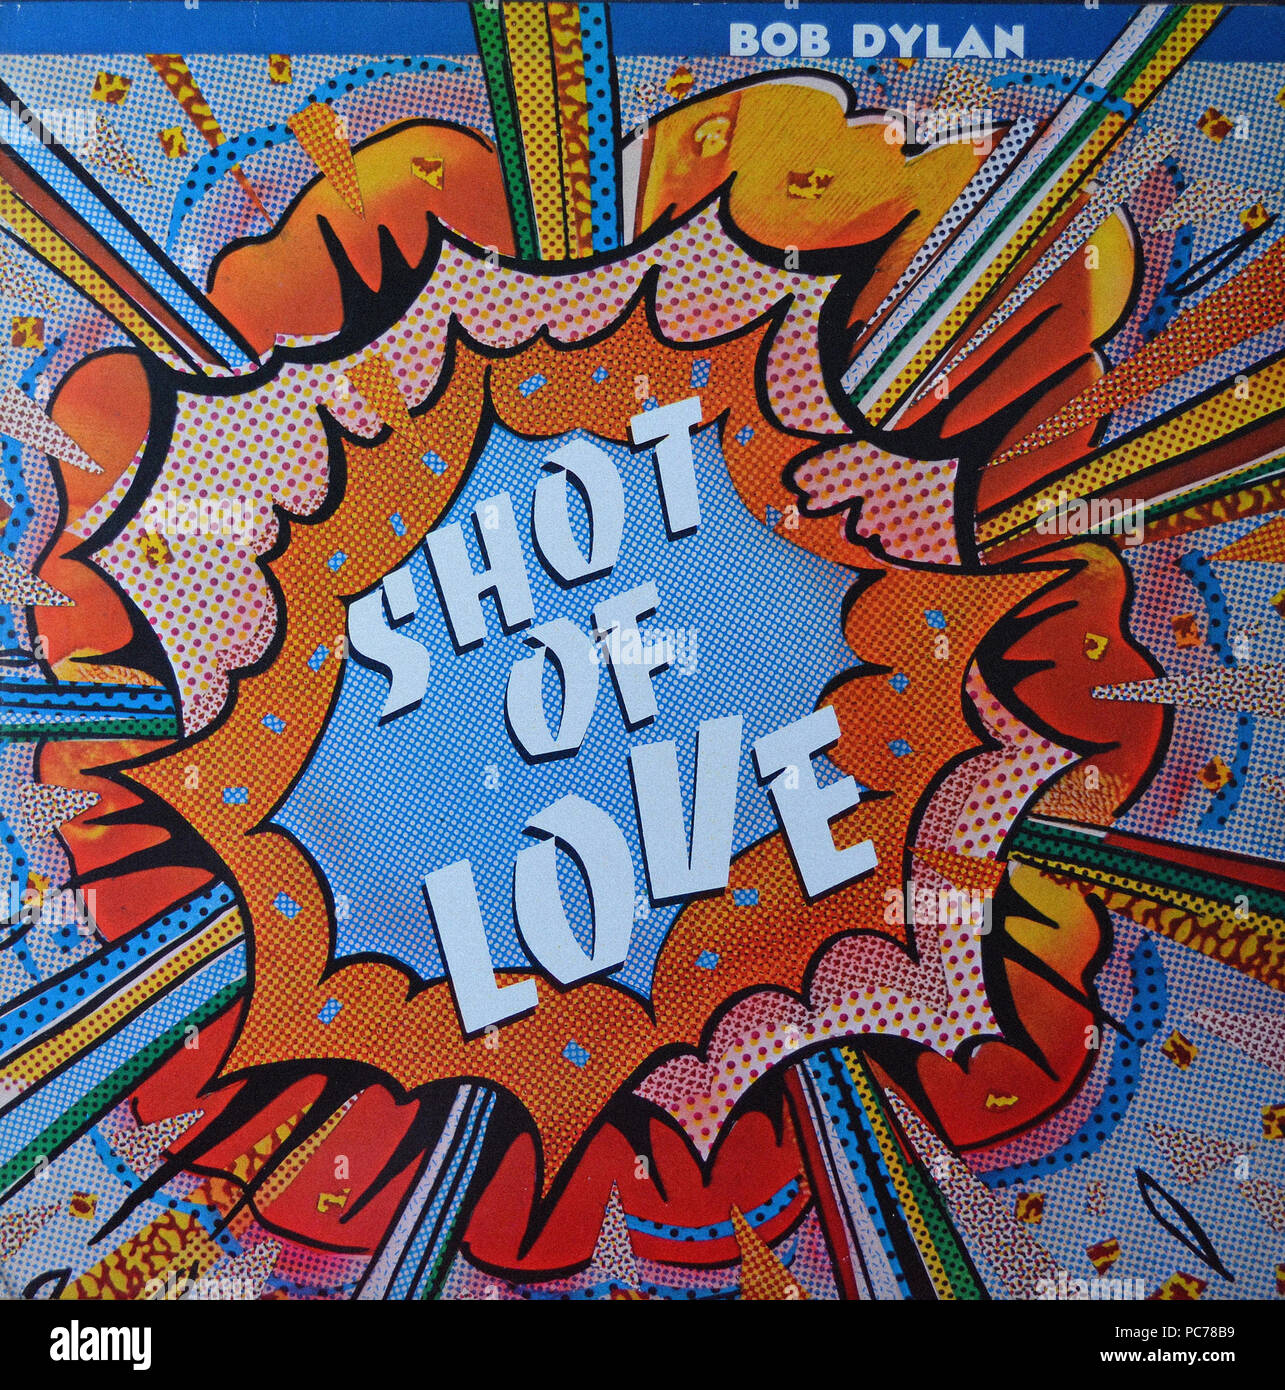 Bob Dylan - Shot Of Love - vinyl album cover Stock Photo Alamy